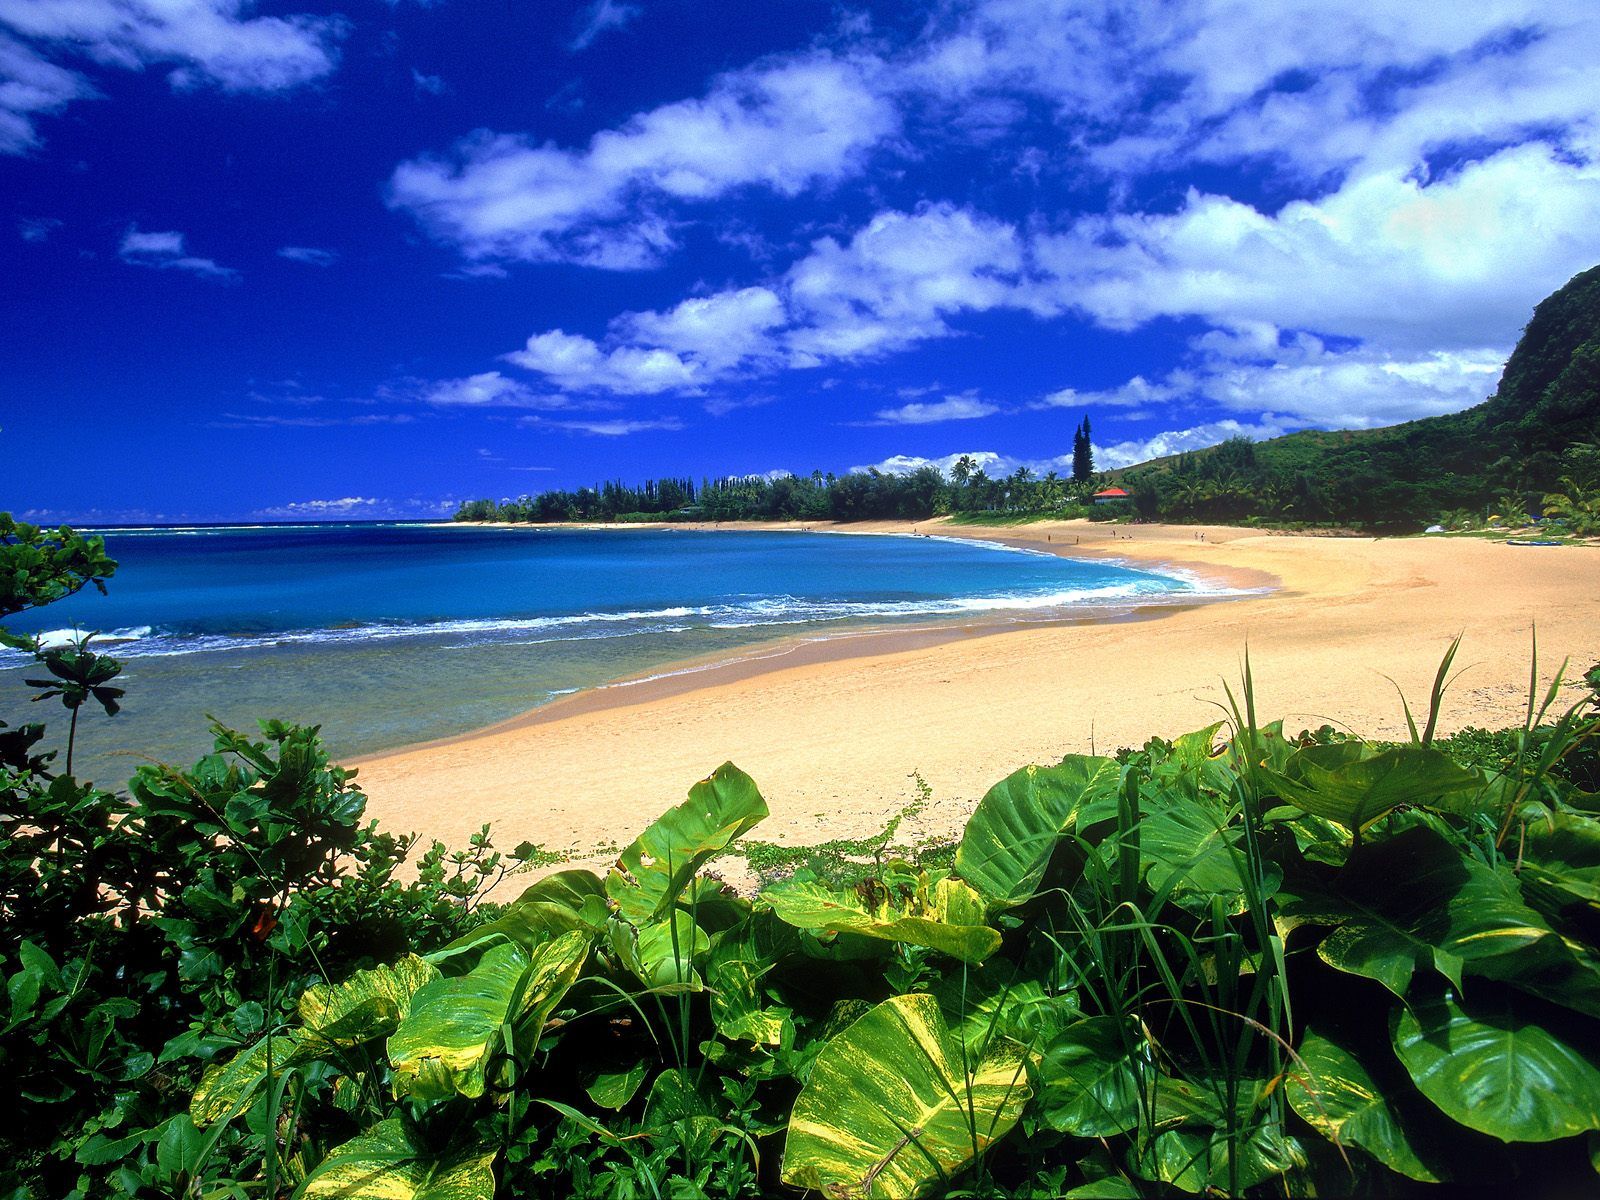 Hawaii Background for Computer. Hawaii Girl Wallpaper, Hawaii Beach Wallpaper and Hawaii Wallpaper Smartphone